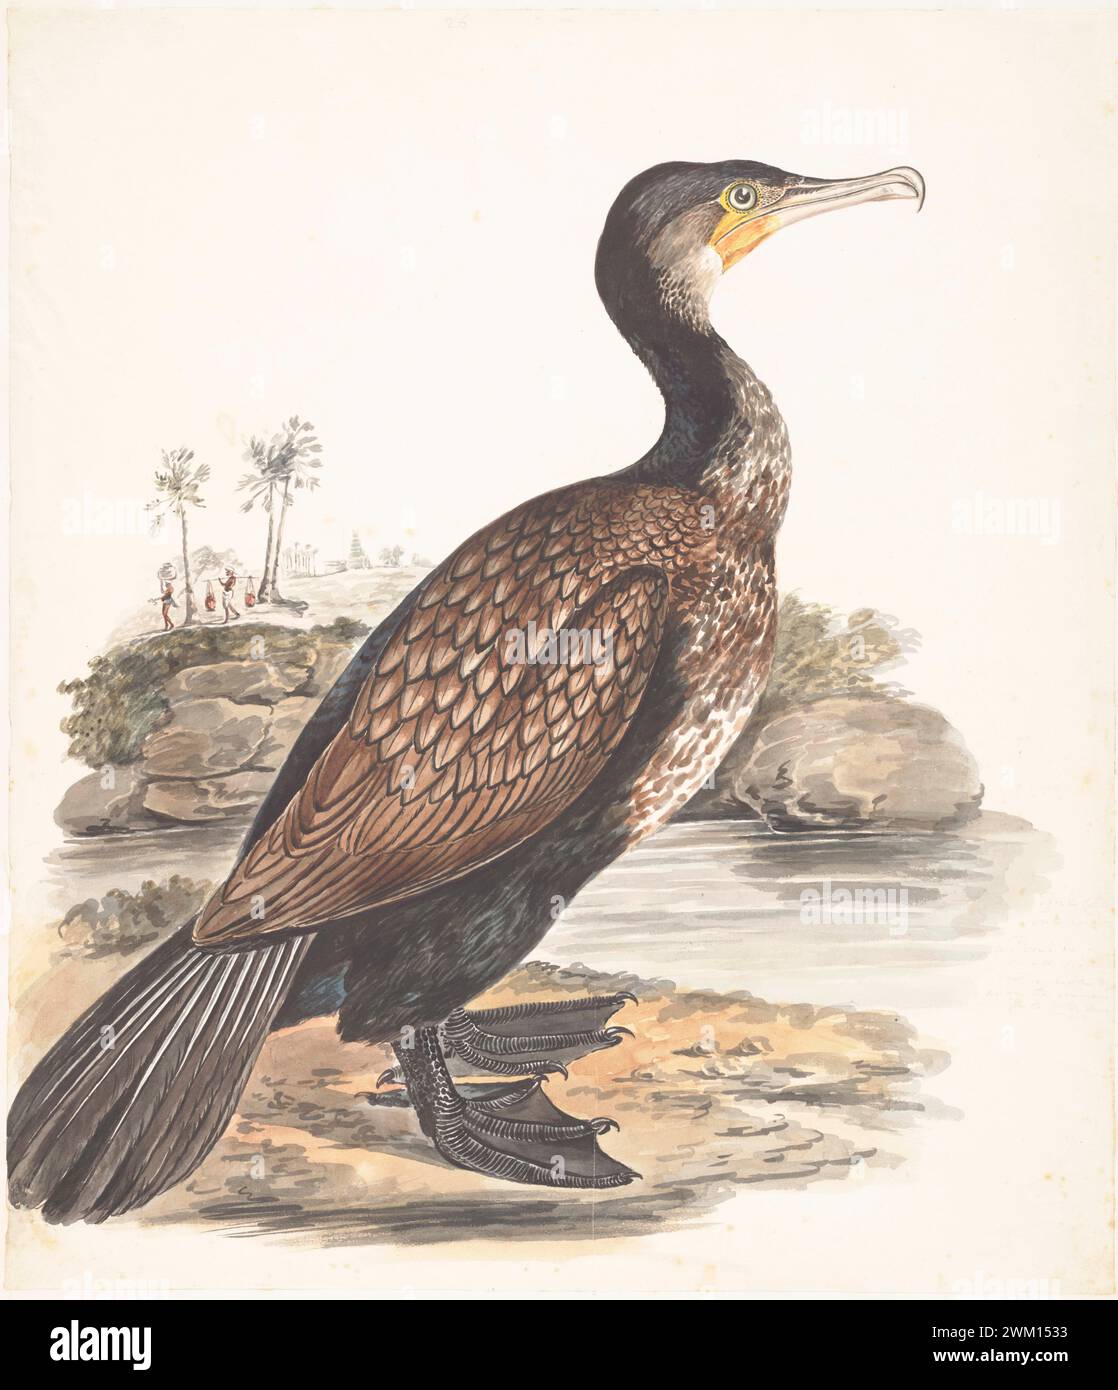 Grande cormorano (Phalacrocorax carbo) di Gwillim Elizabeth nel 1801 Foto Stock